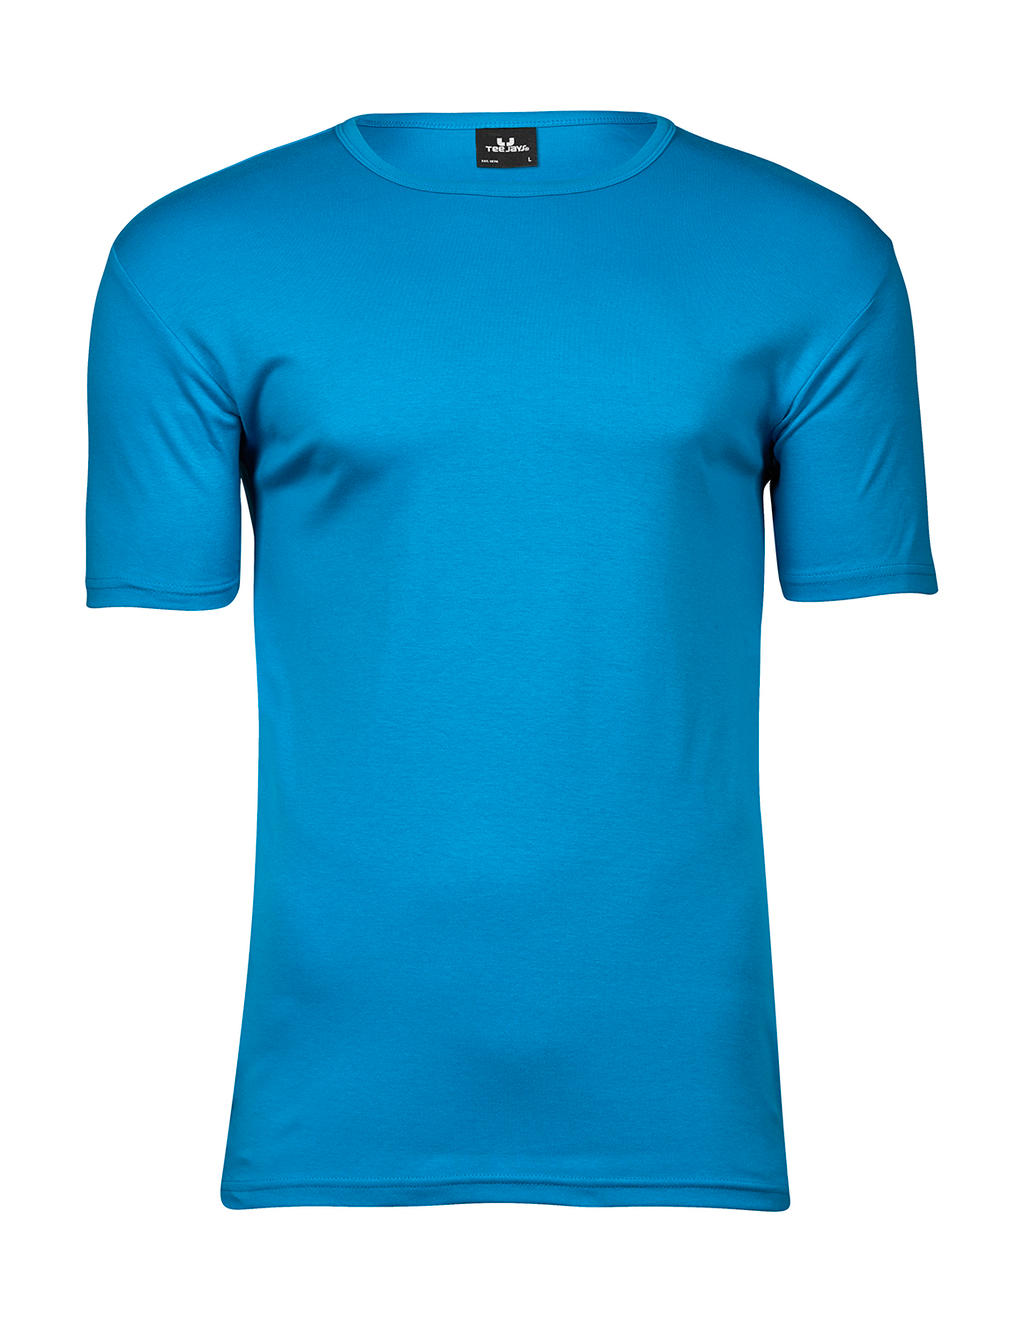 Tee jays - camiseta orgánica interlock hombre - 153. 54